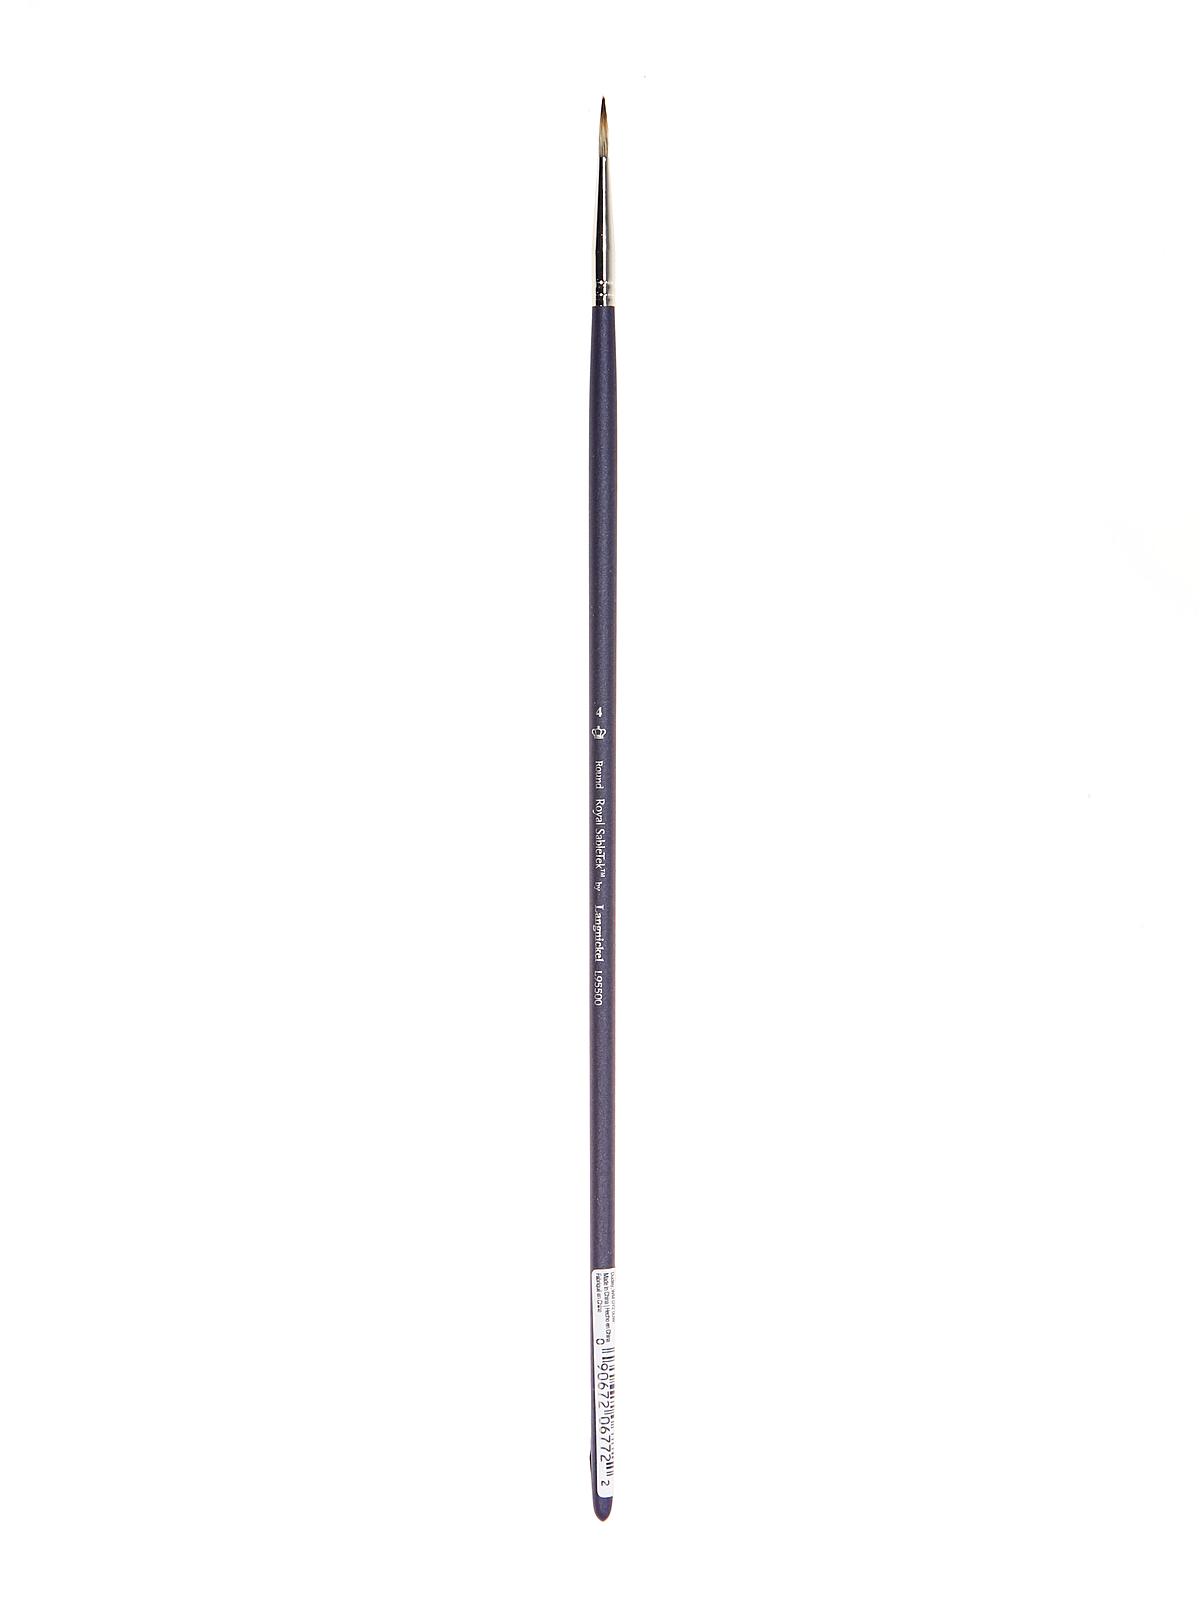 Sabletek Brushes Long Handle 4 Round L95500